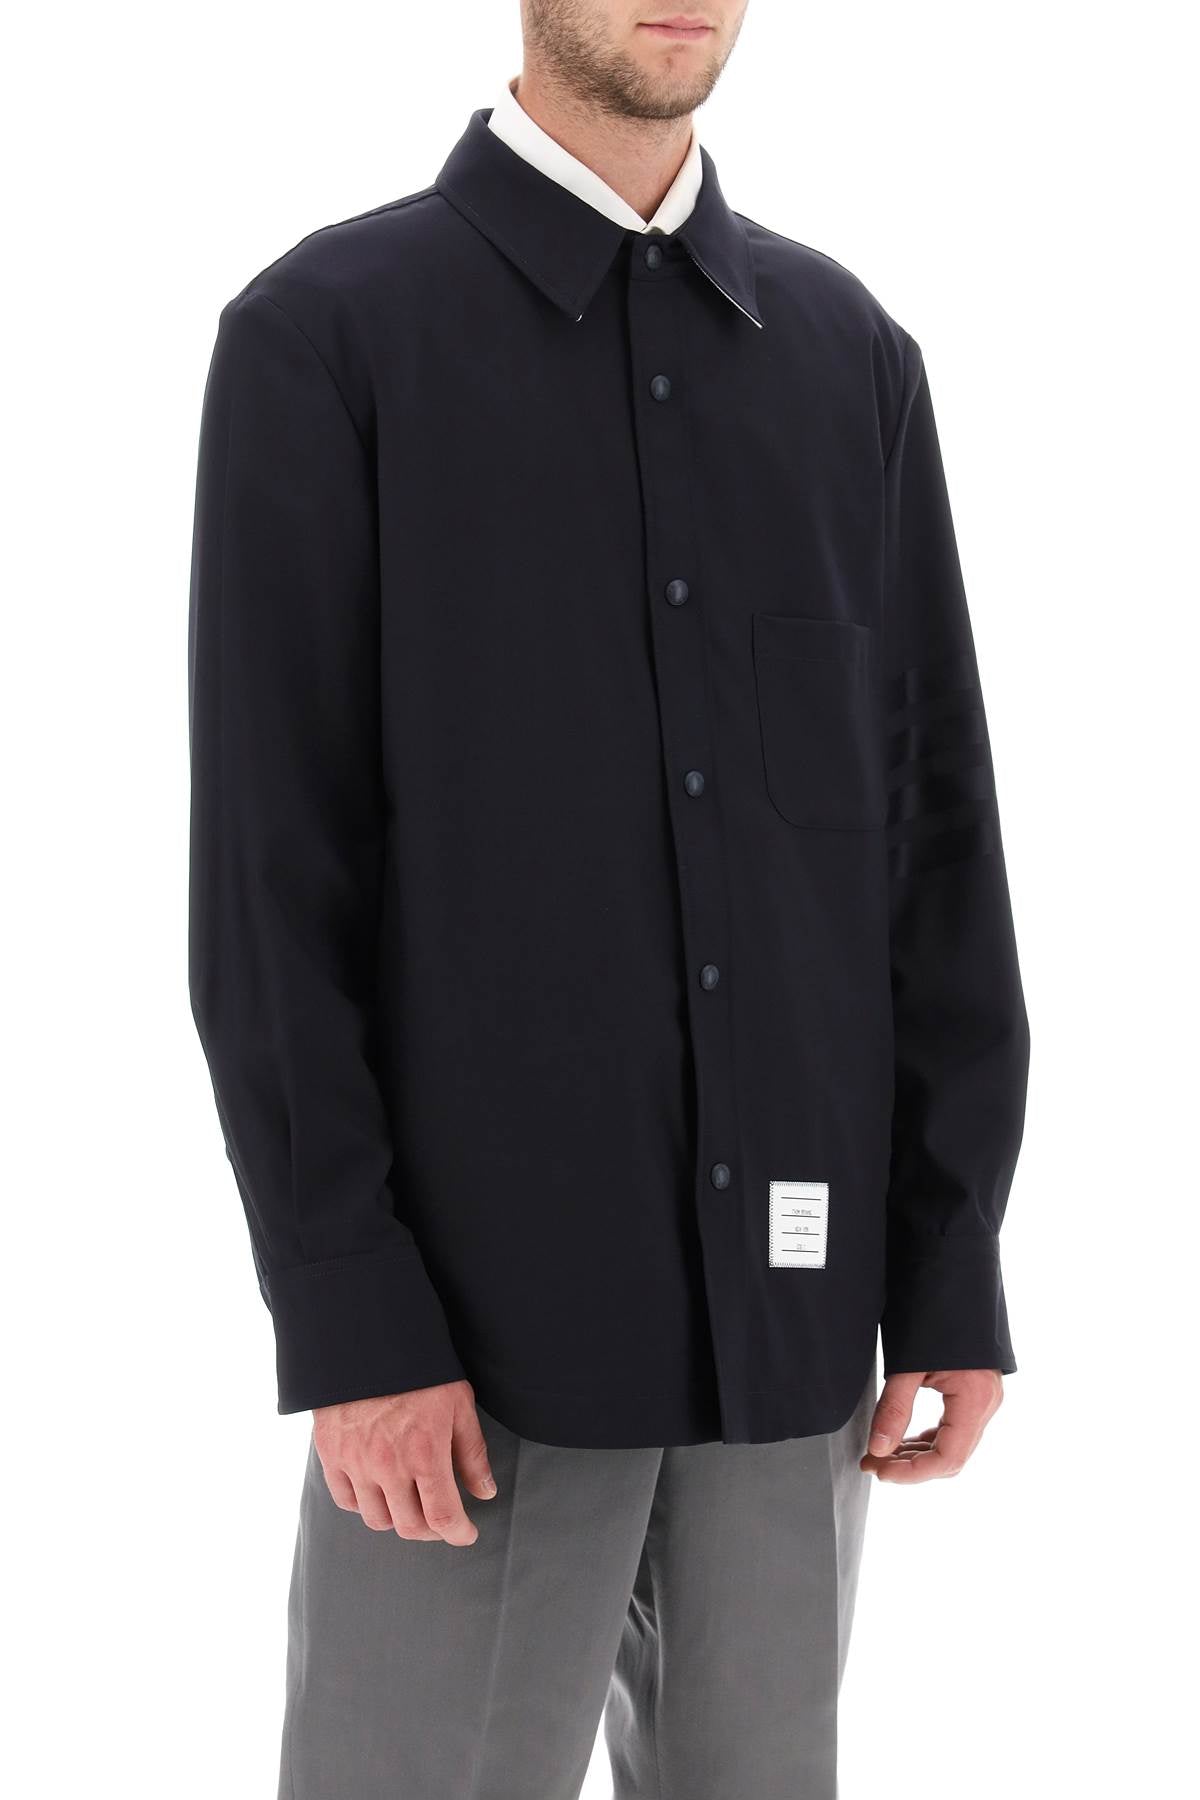 Thom browne 4-bar shirt in light wool-1